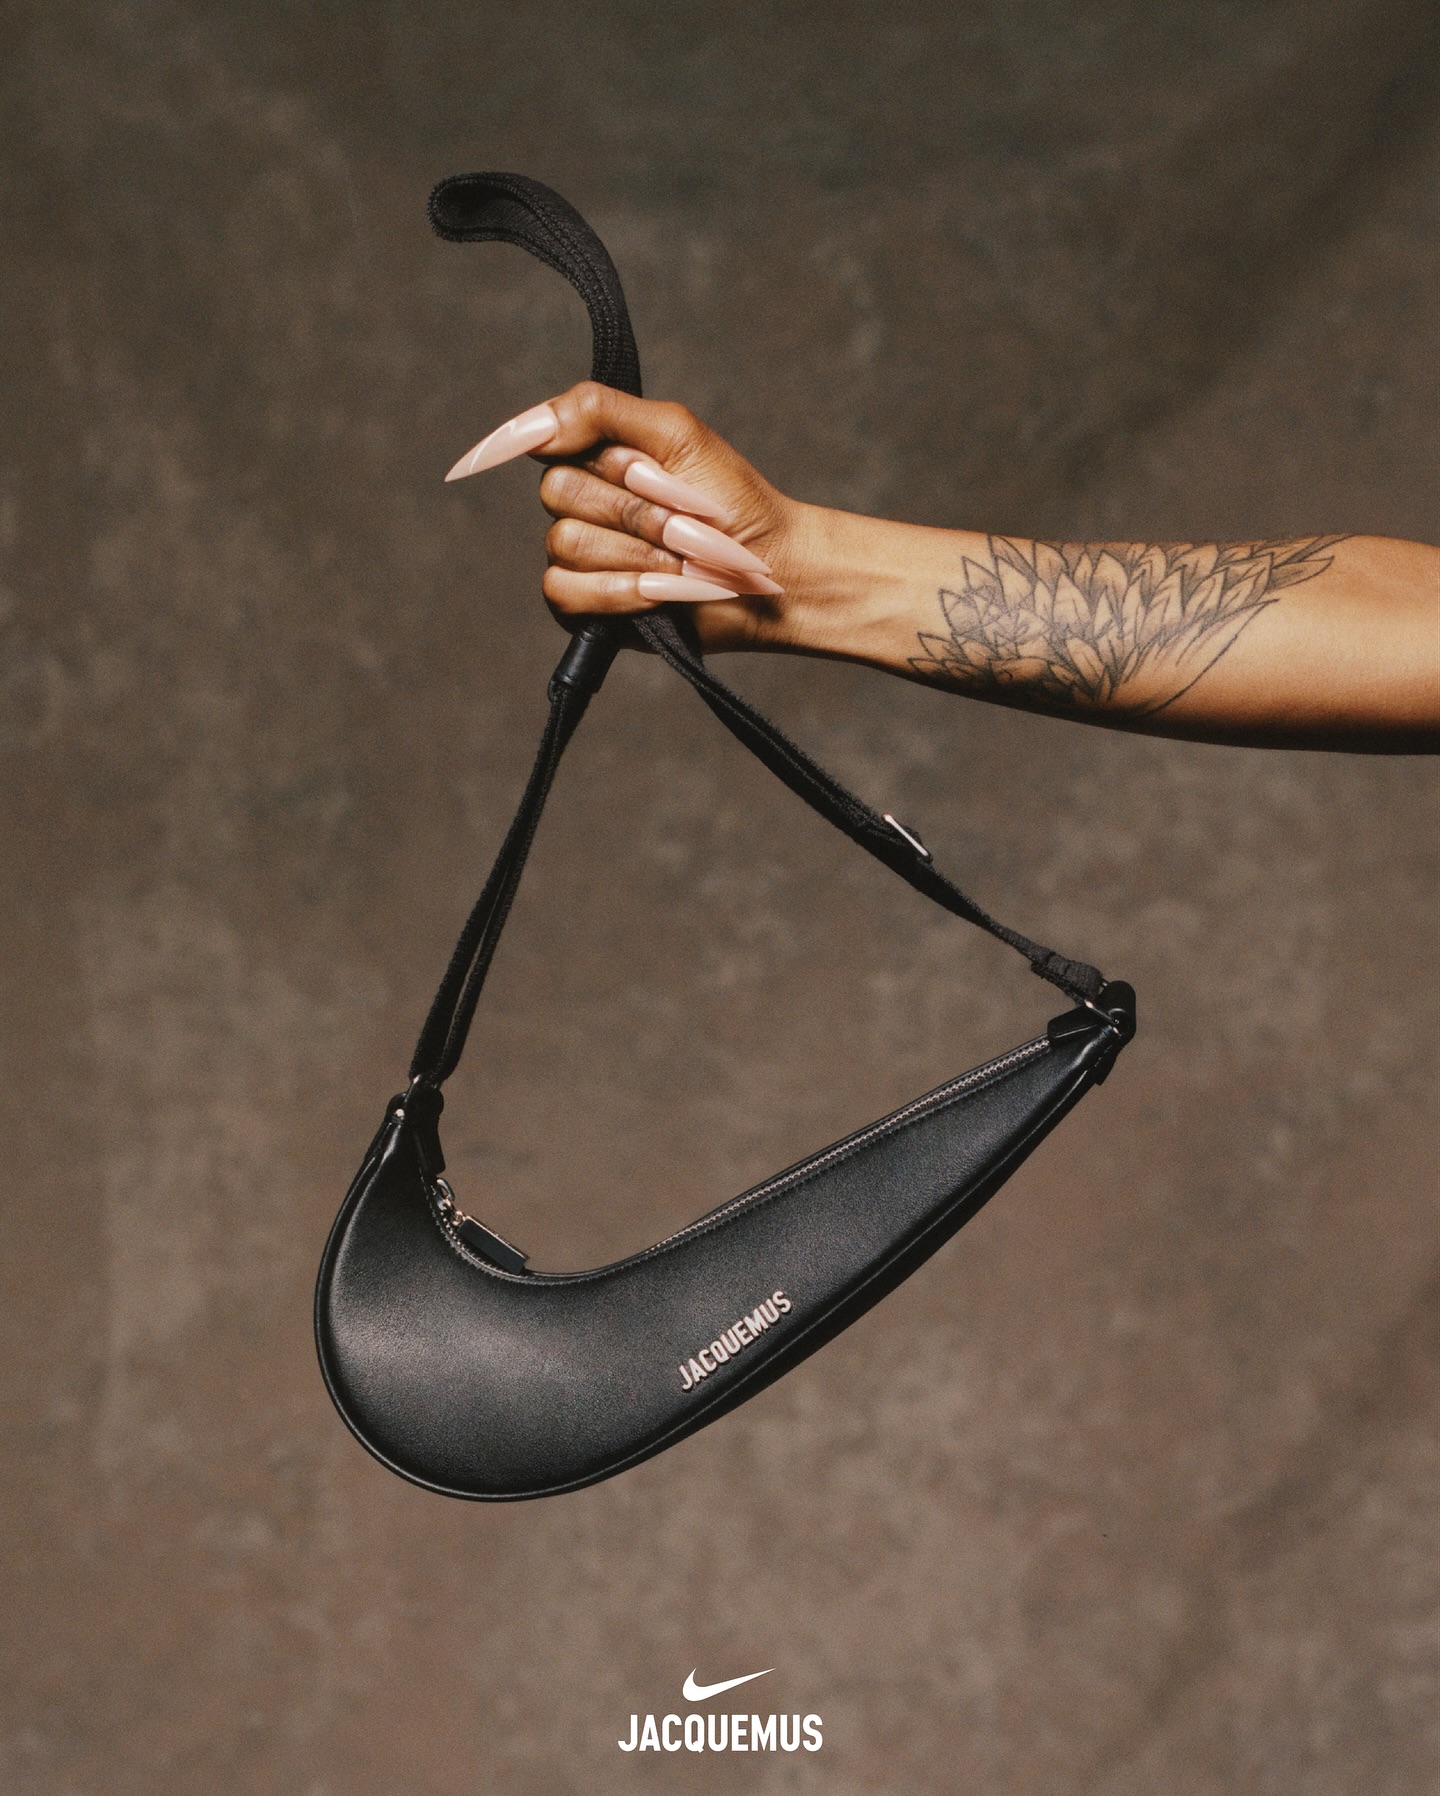 Sha'Carri Richardson holding Jacquemus' black leather Nike Swoosh handbag